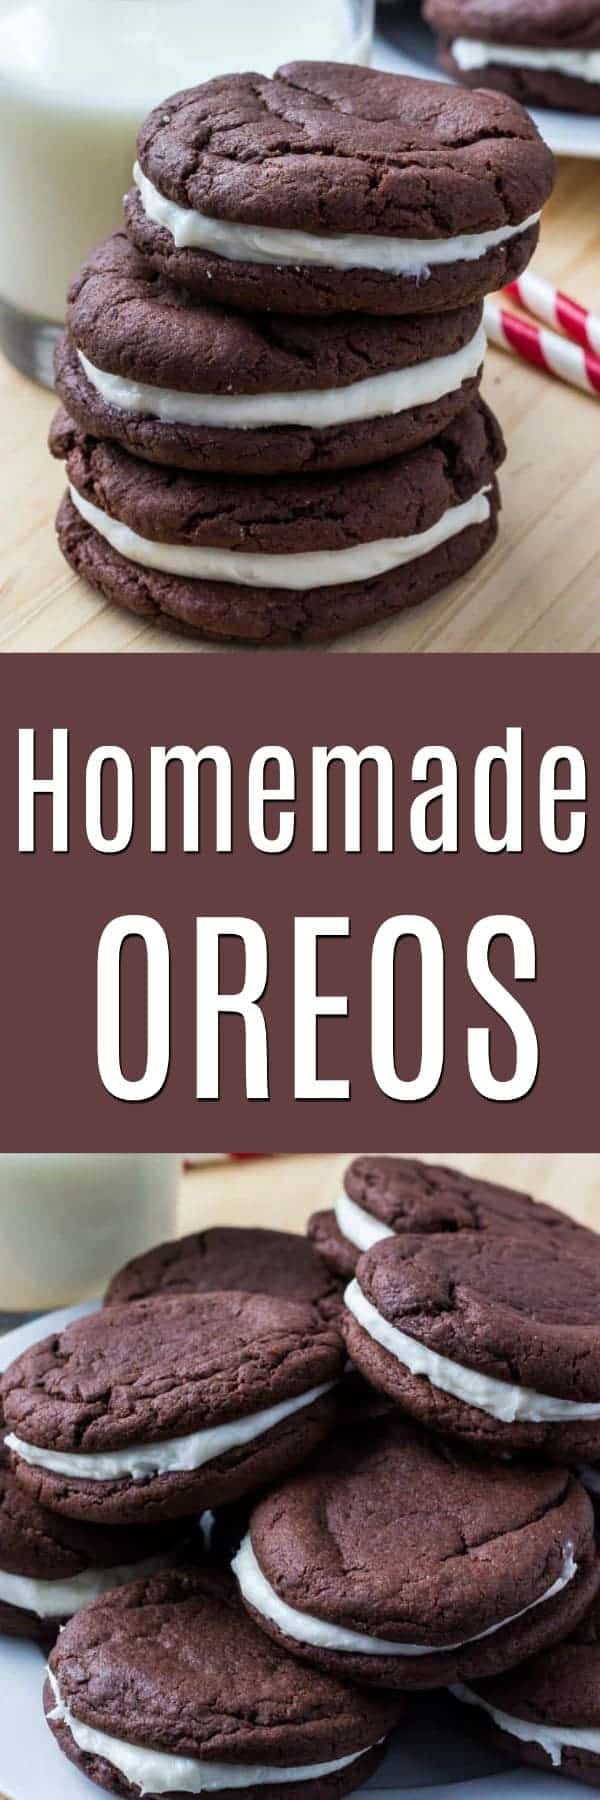 A Pinterest image for homemade Oreos